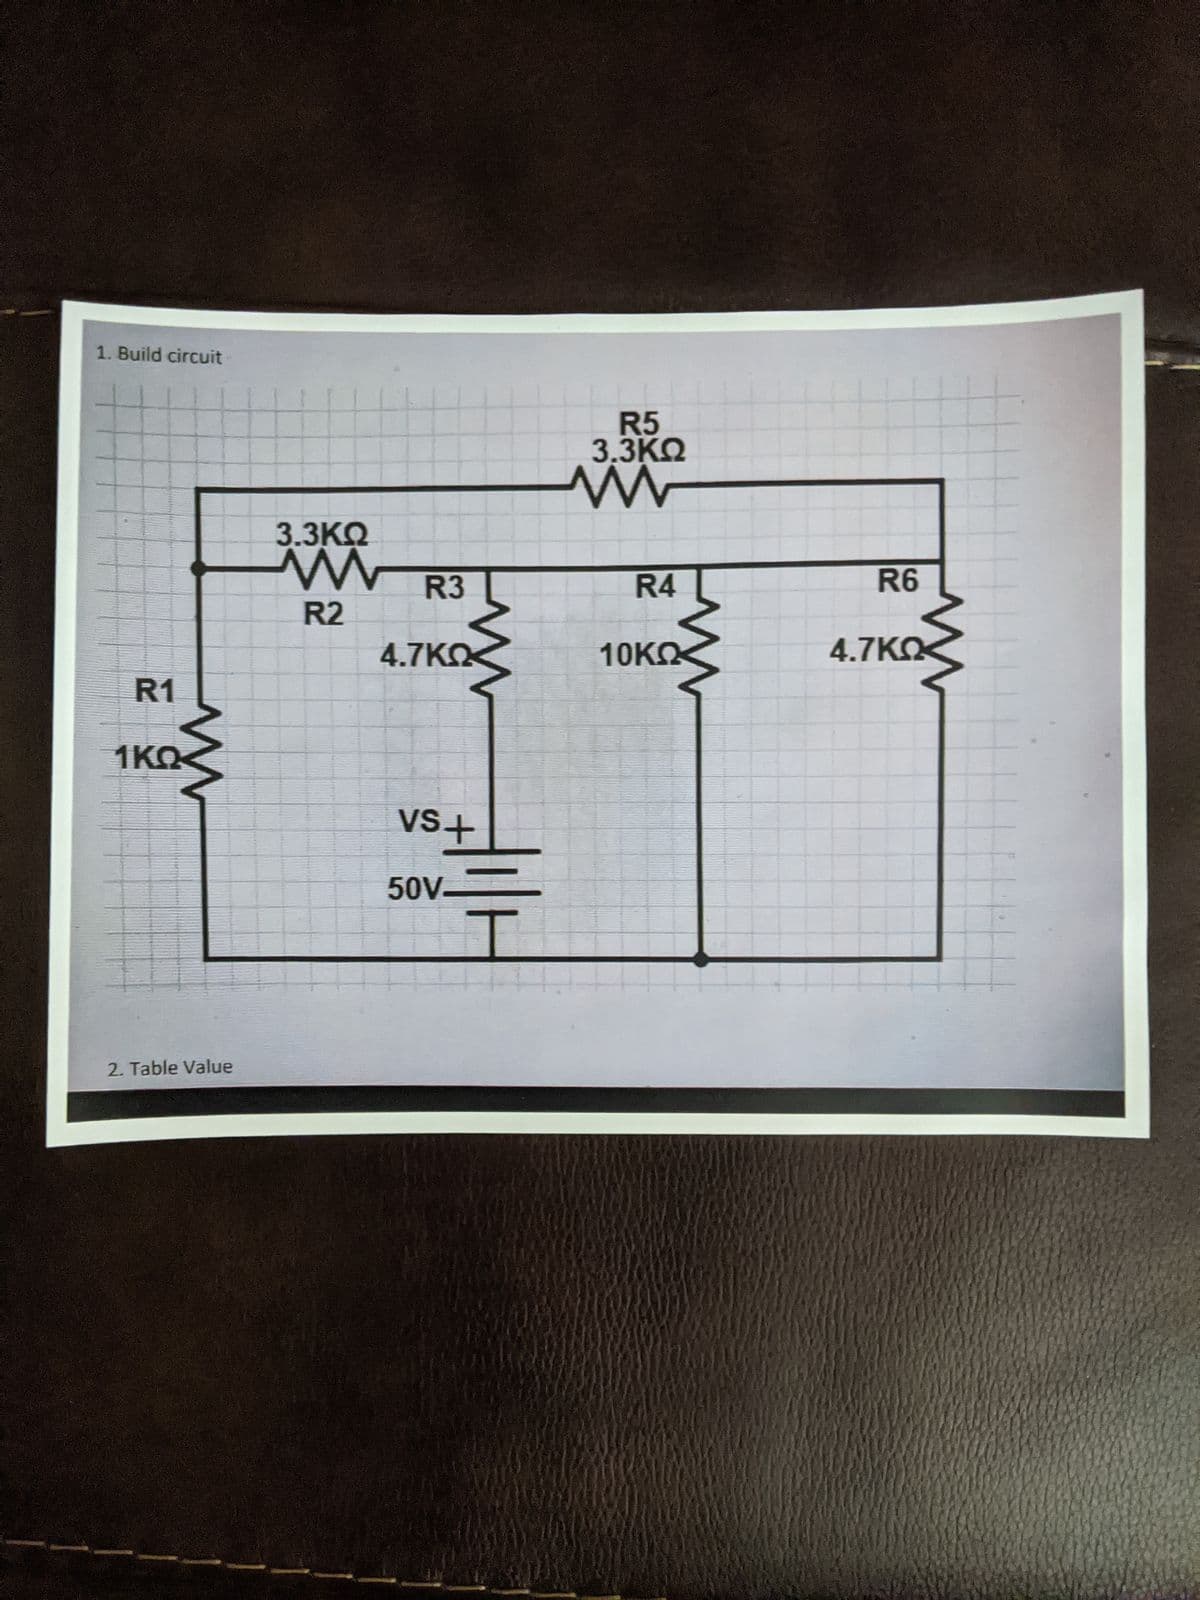 1. Build circuit
3.3KO
3.3KO
R3
R4
R6
R2
4.7ΚΩ
10KO
4.7KO
R1
1KO
Vs+
50V-
2. Table Value
